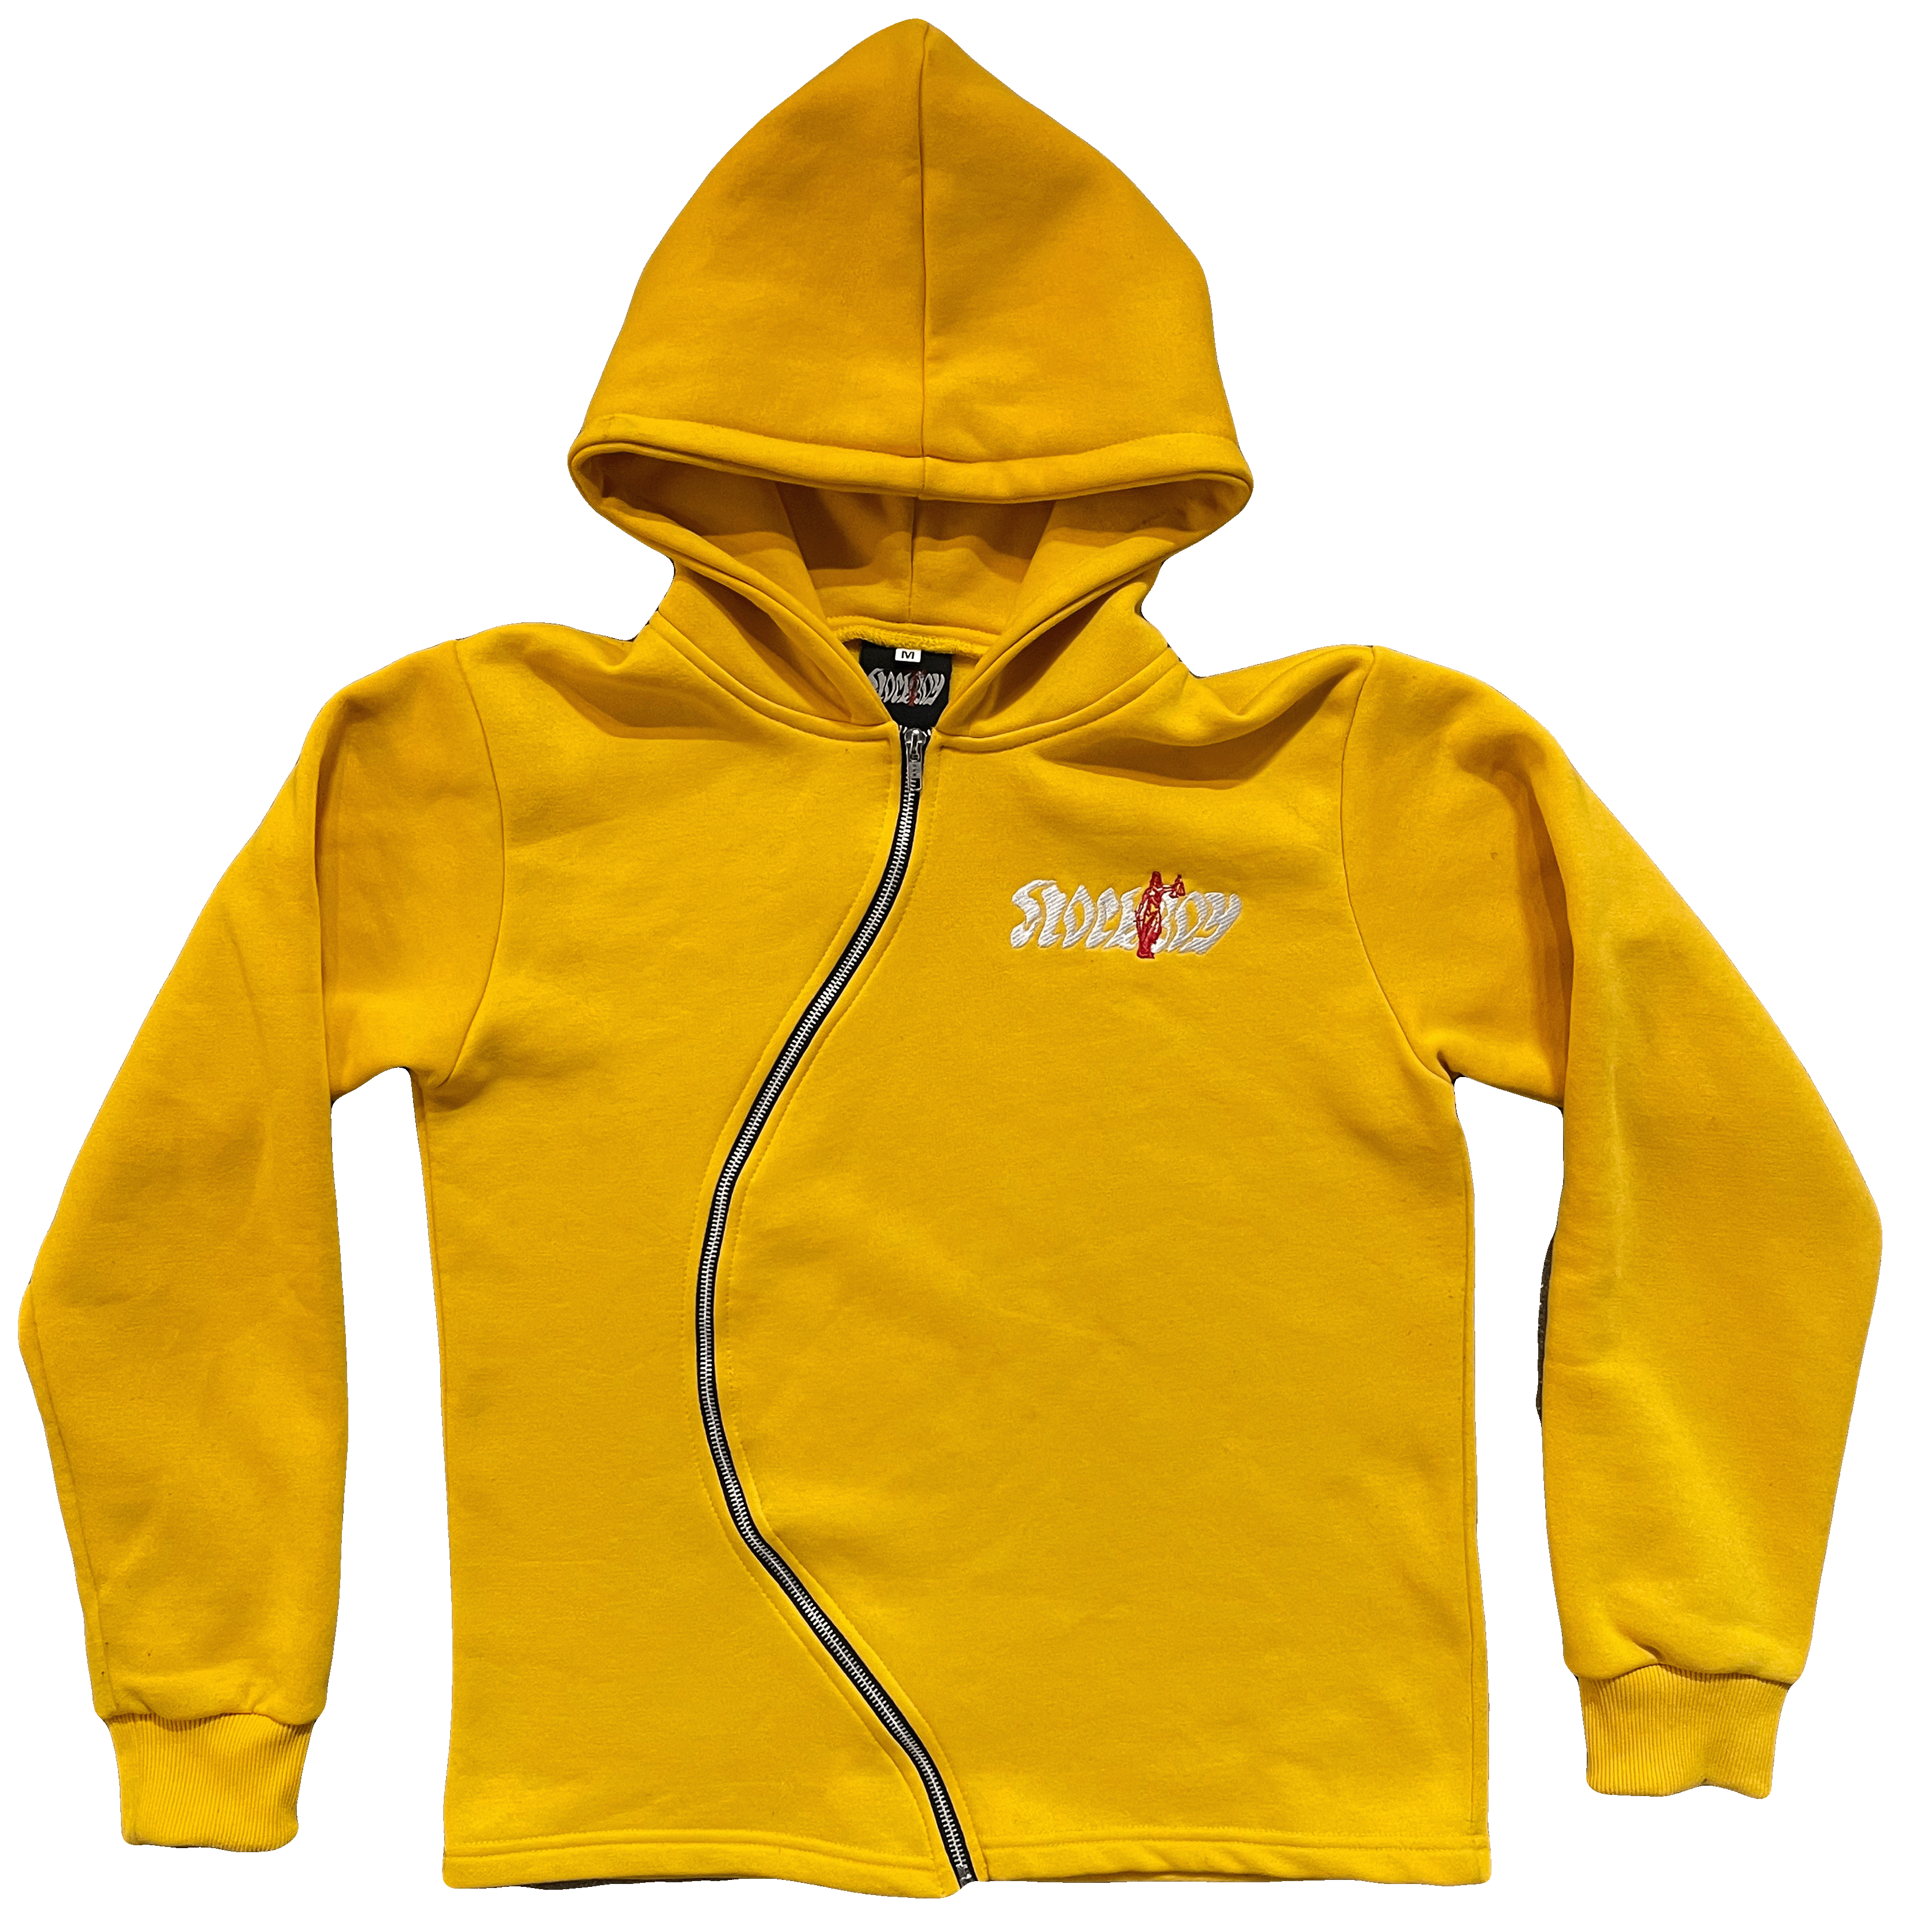 StockBoy Alternative Zip-Up (Yellow) 60 USD